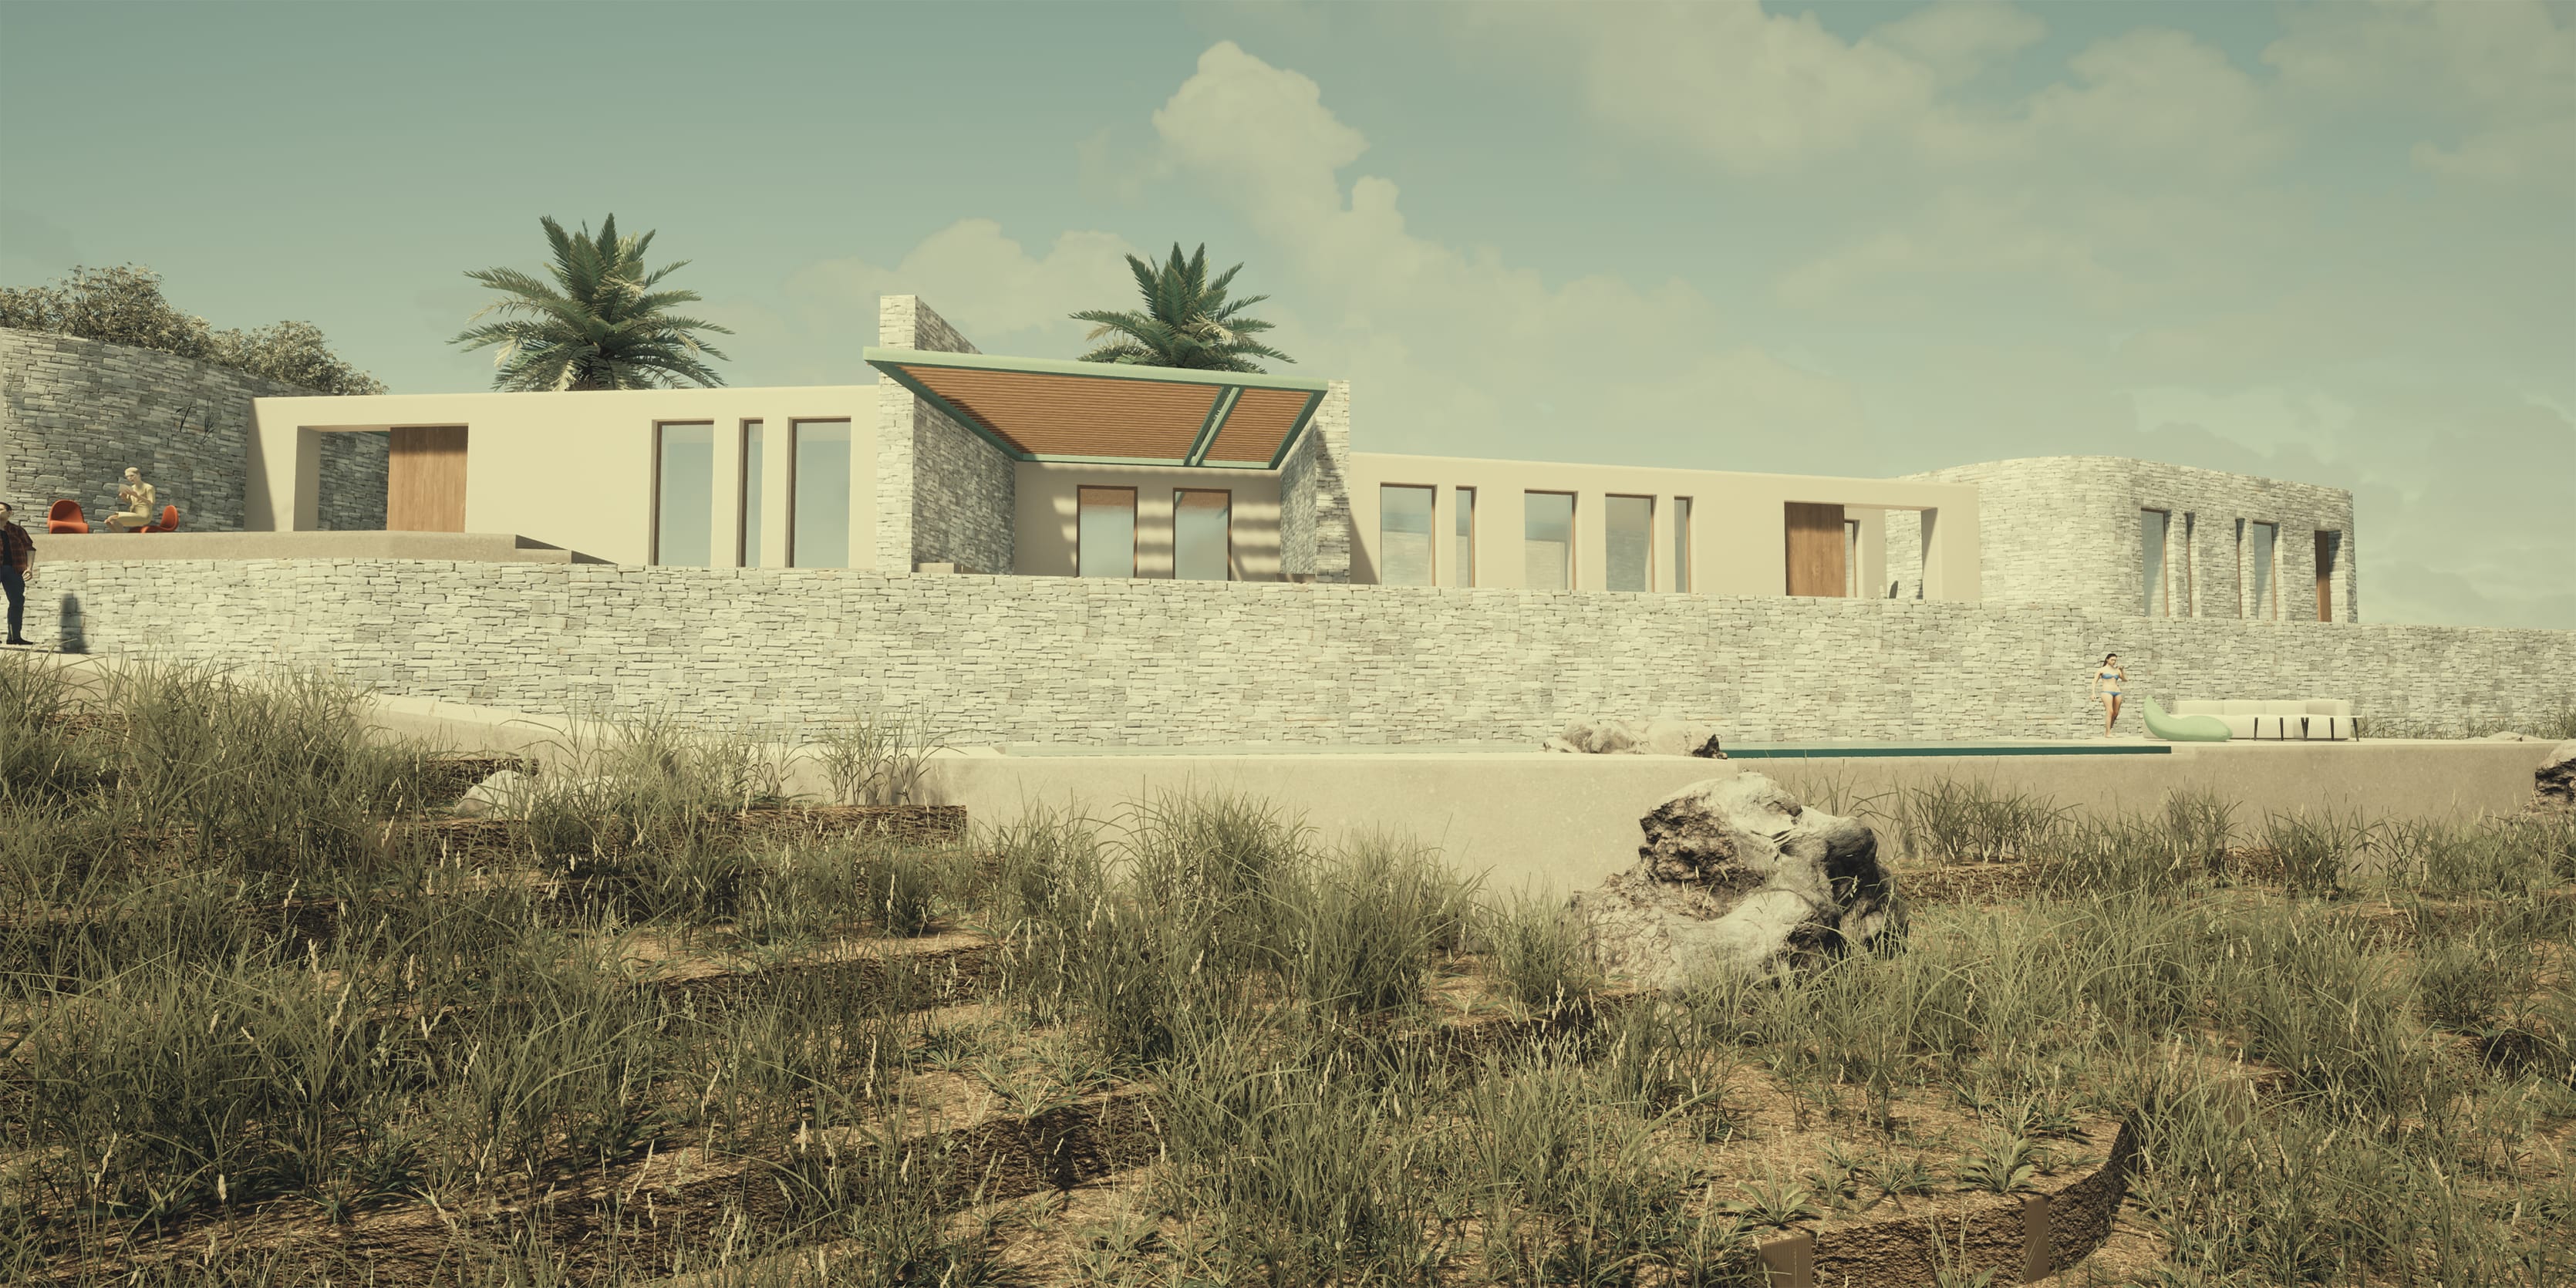 Evripiotis Architects--The Move, Paros Island